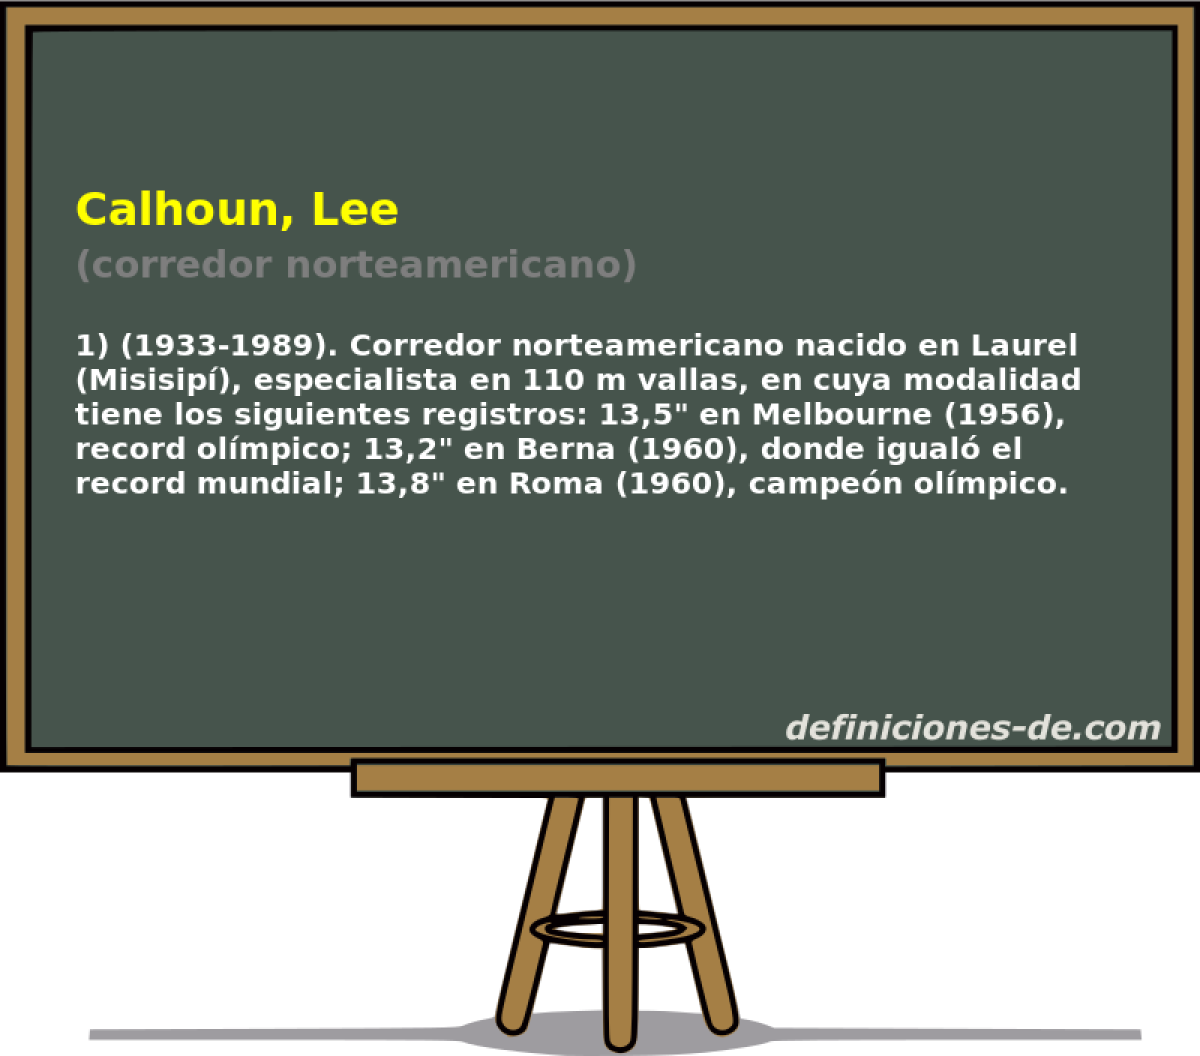 Calhoun, Lee (corredor norteamericano)